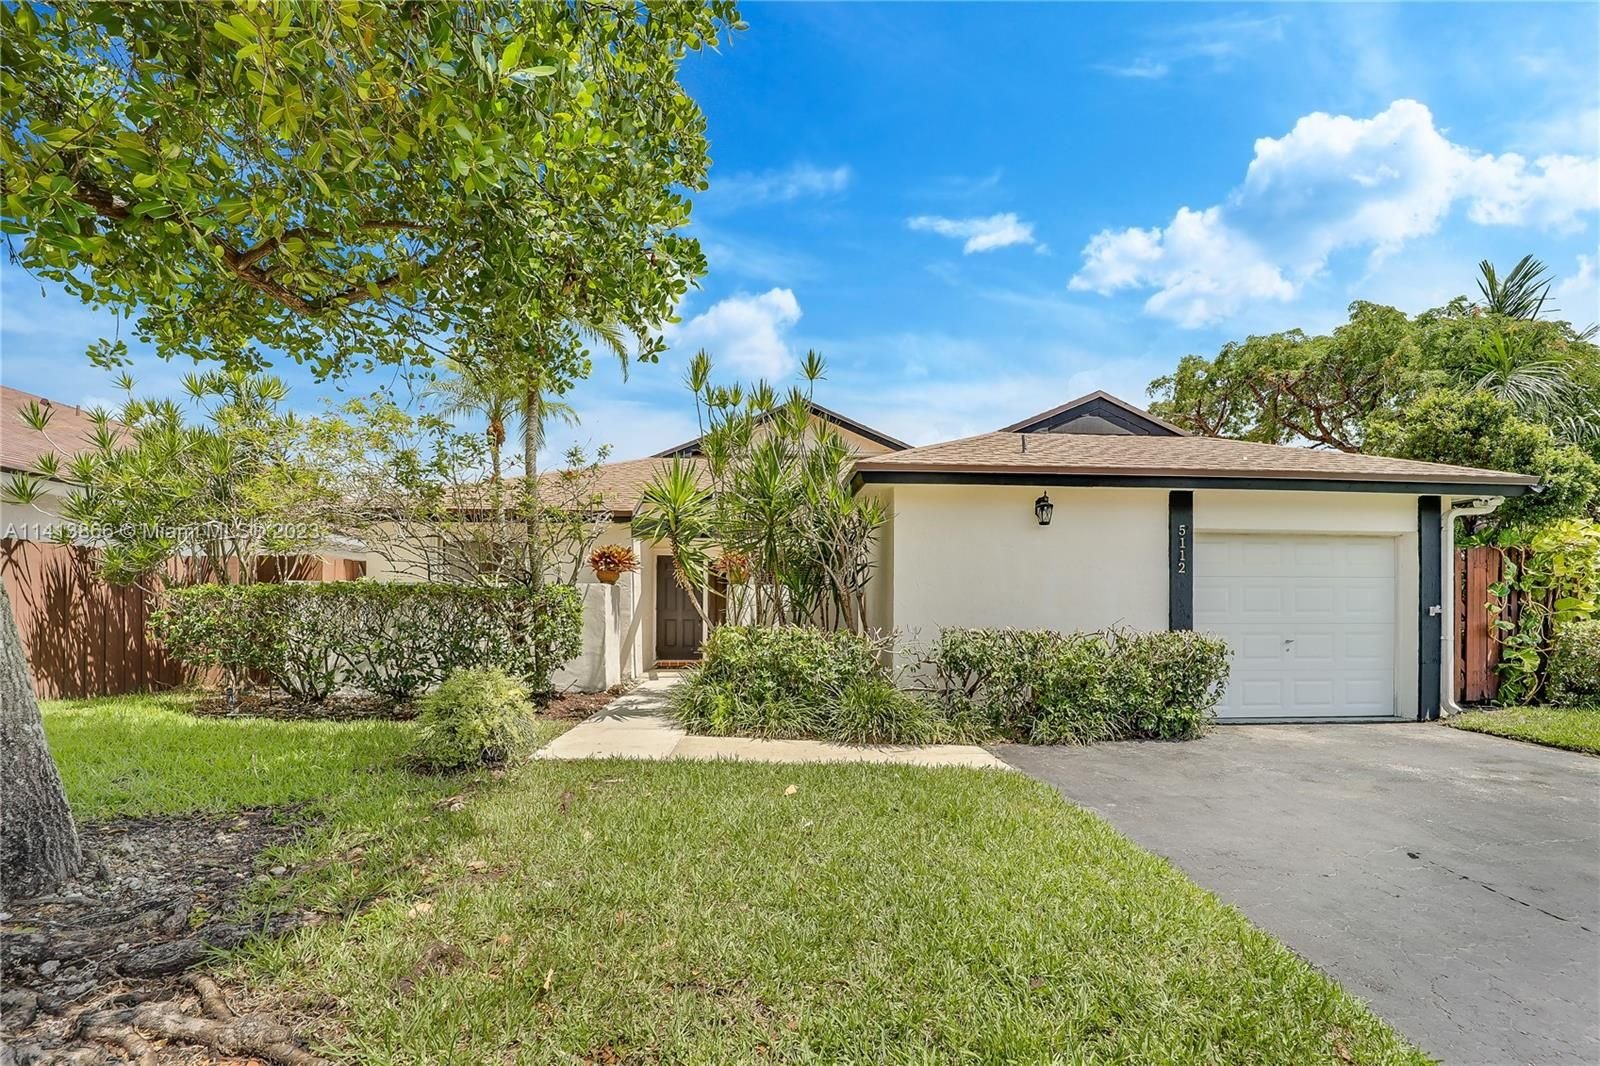 Real estate property located at 5112 149th Pl, Miami-Dade County, Miami, FL